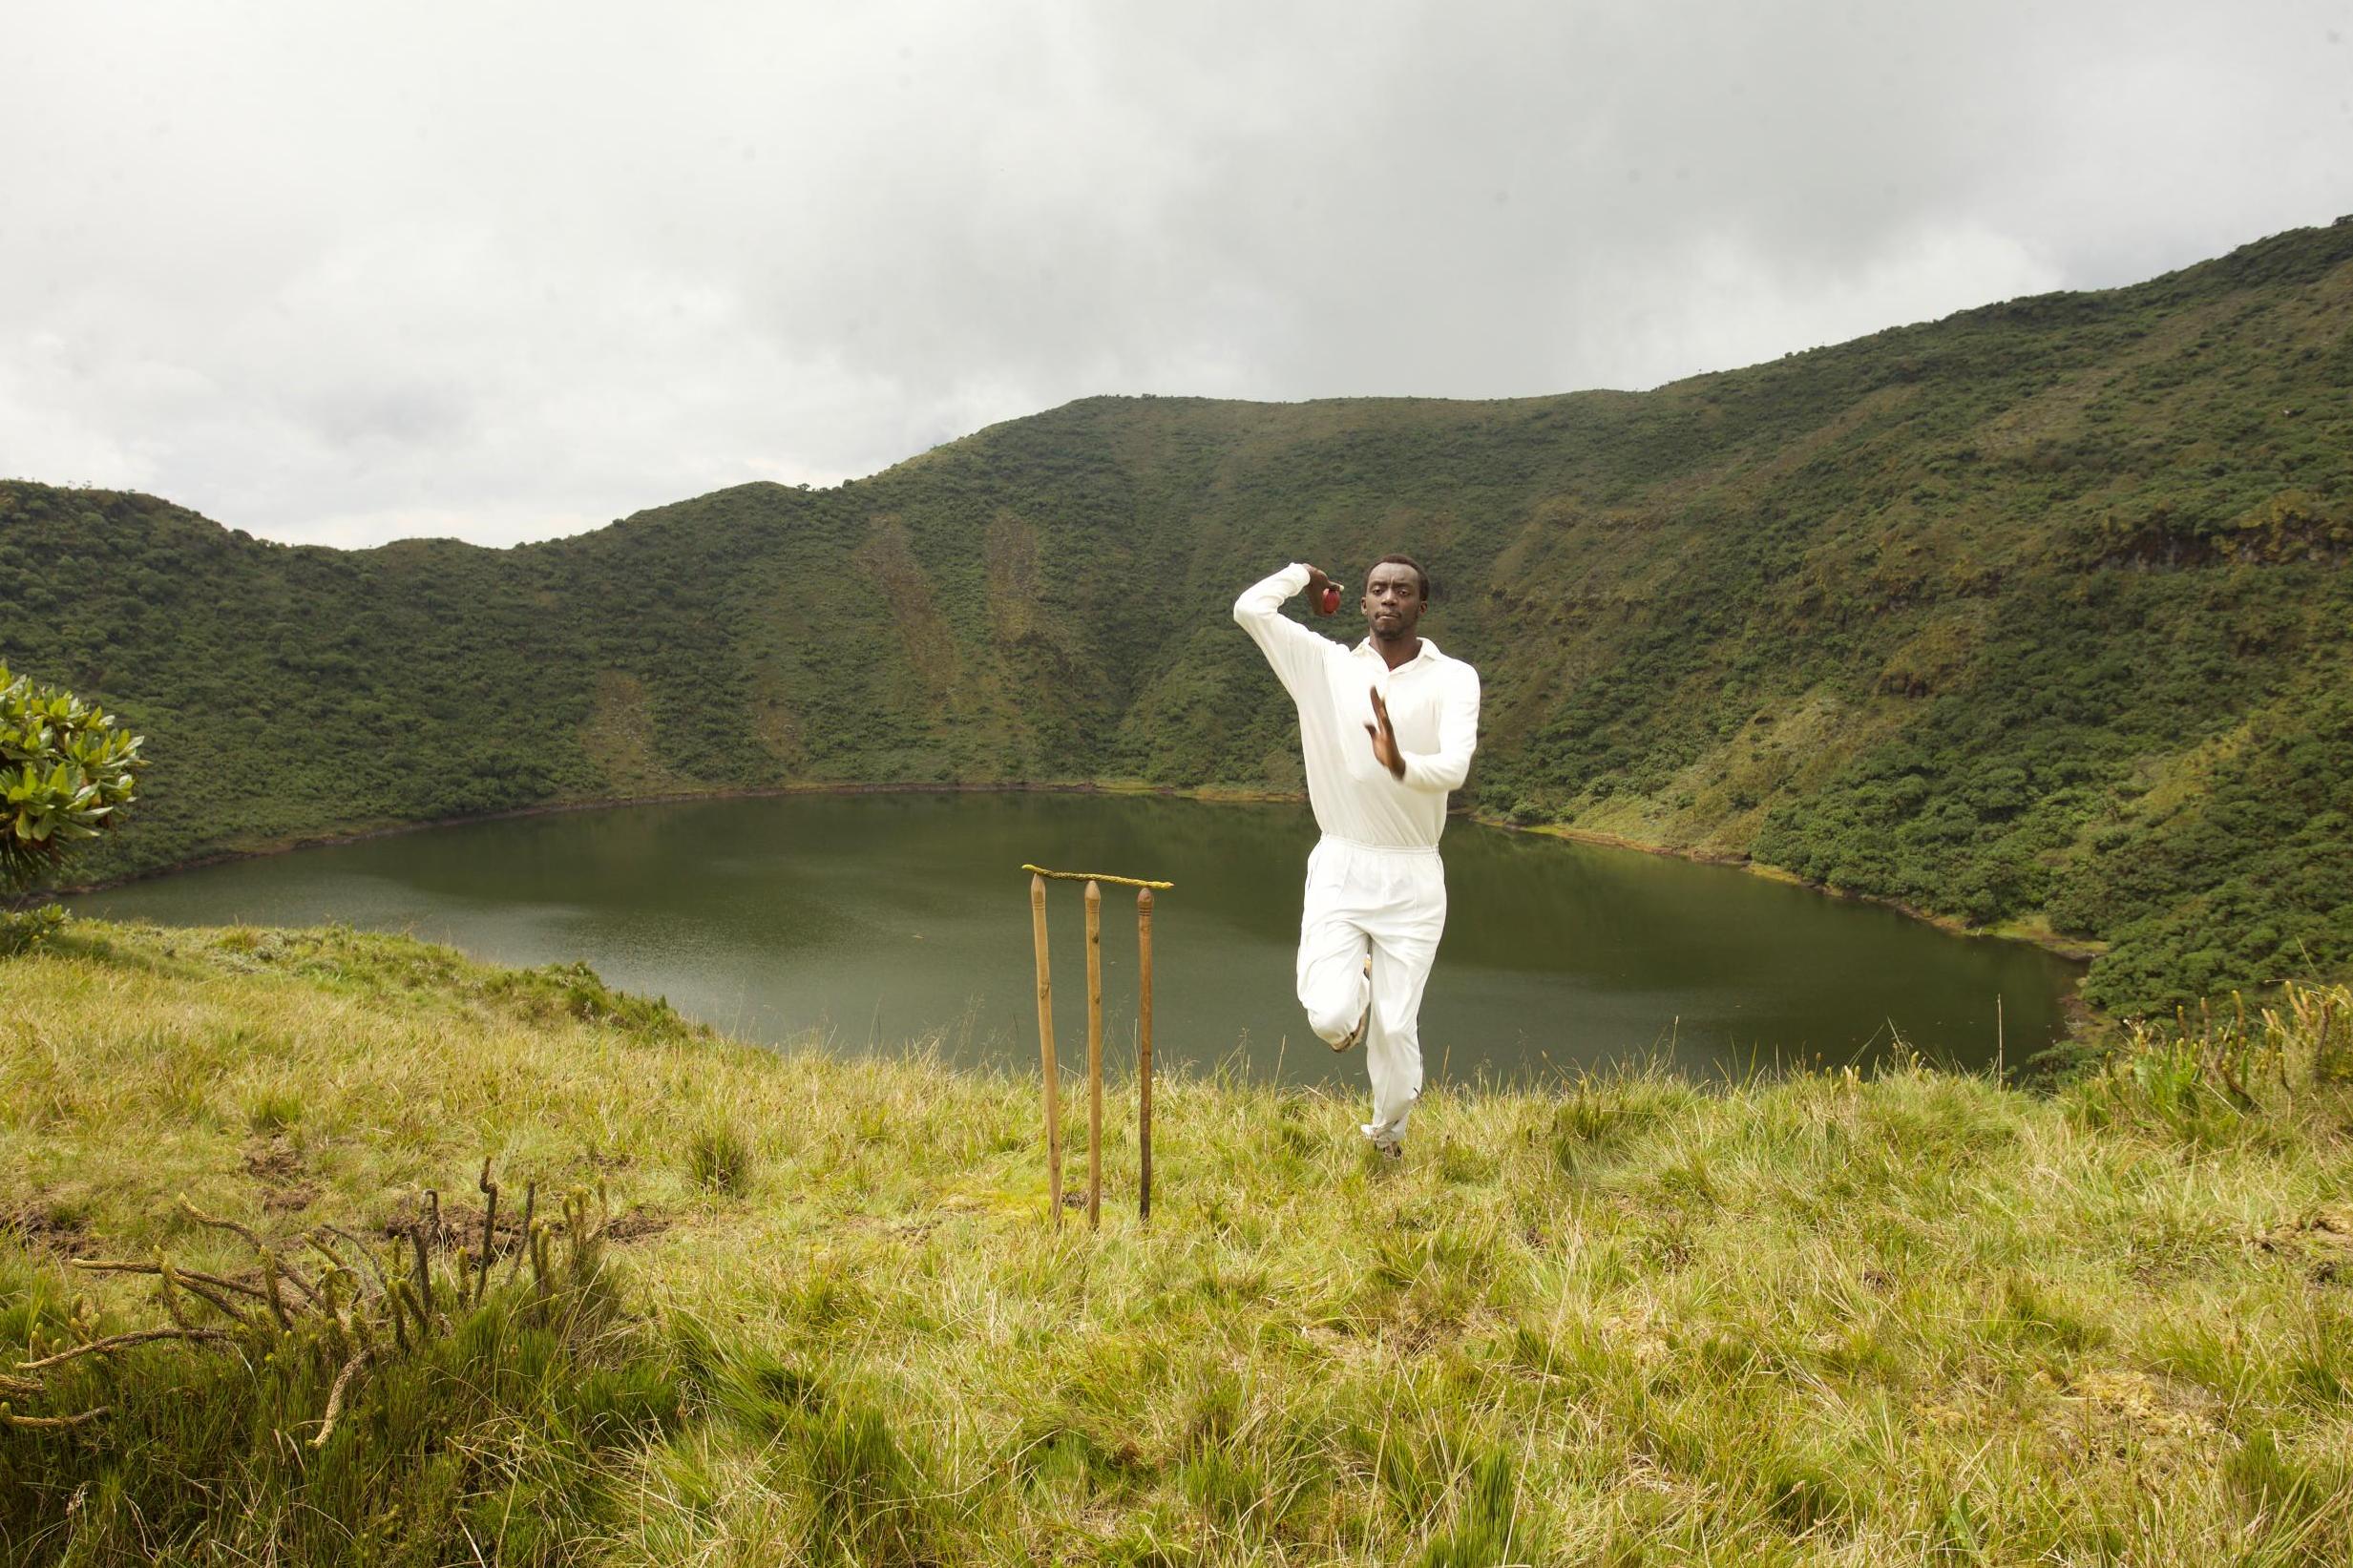 The cricket scene only got going post-genocide in Rwanda